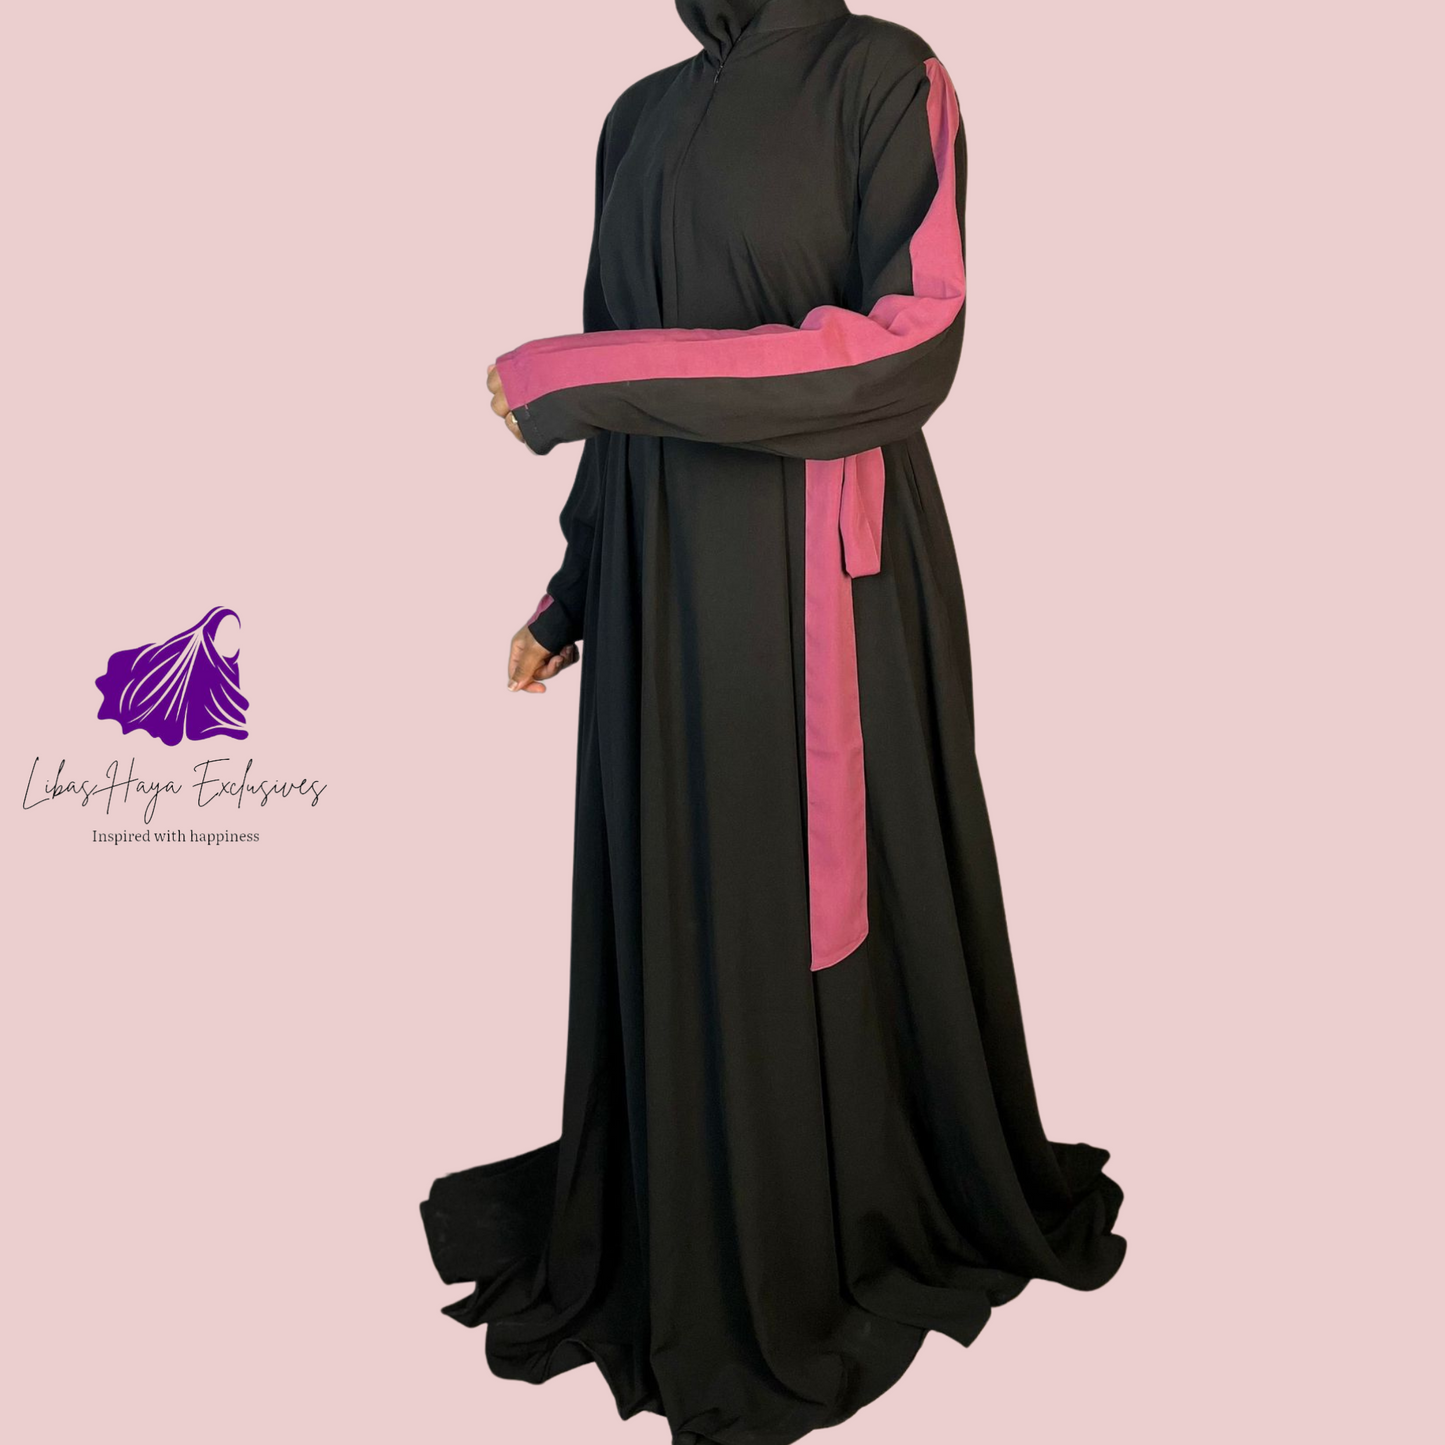 Abaya Asma - Black & Mauve Abaya dress with Pockets and zippered sleeves.